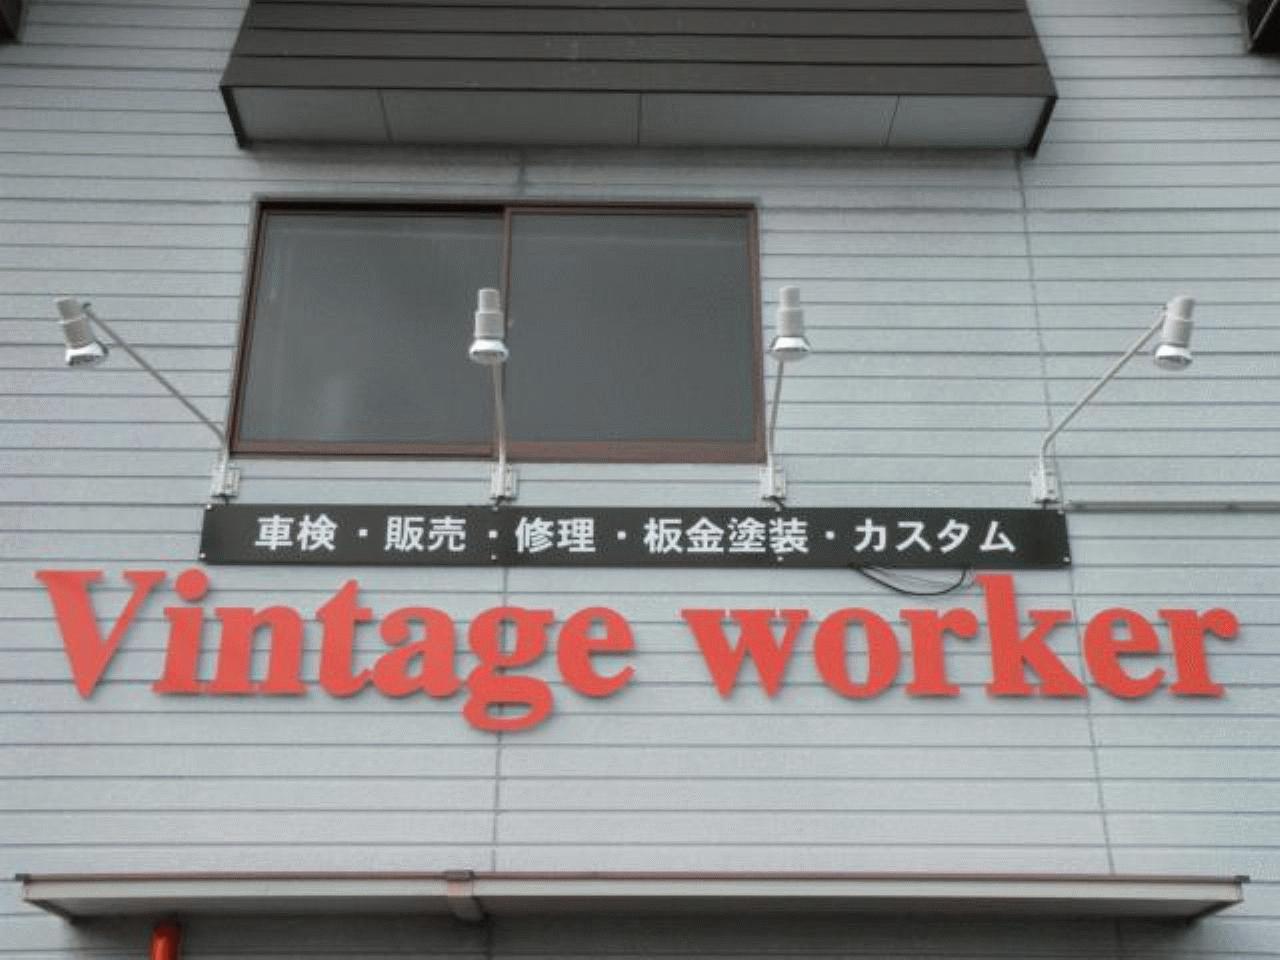 Vintage worker